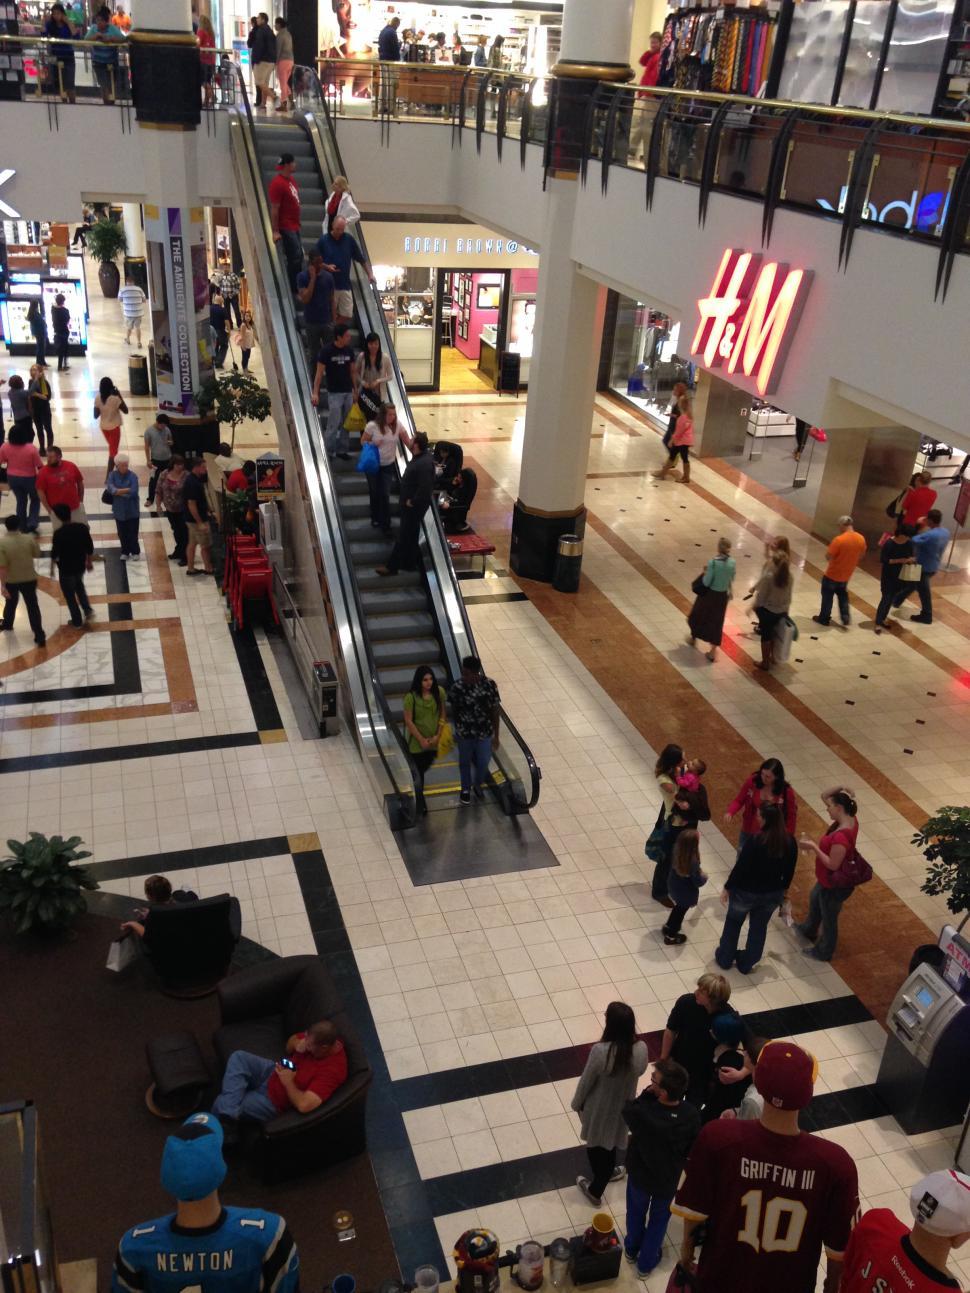 Free Image of Mall Scene 